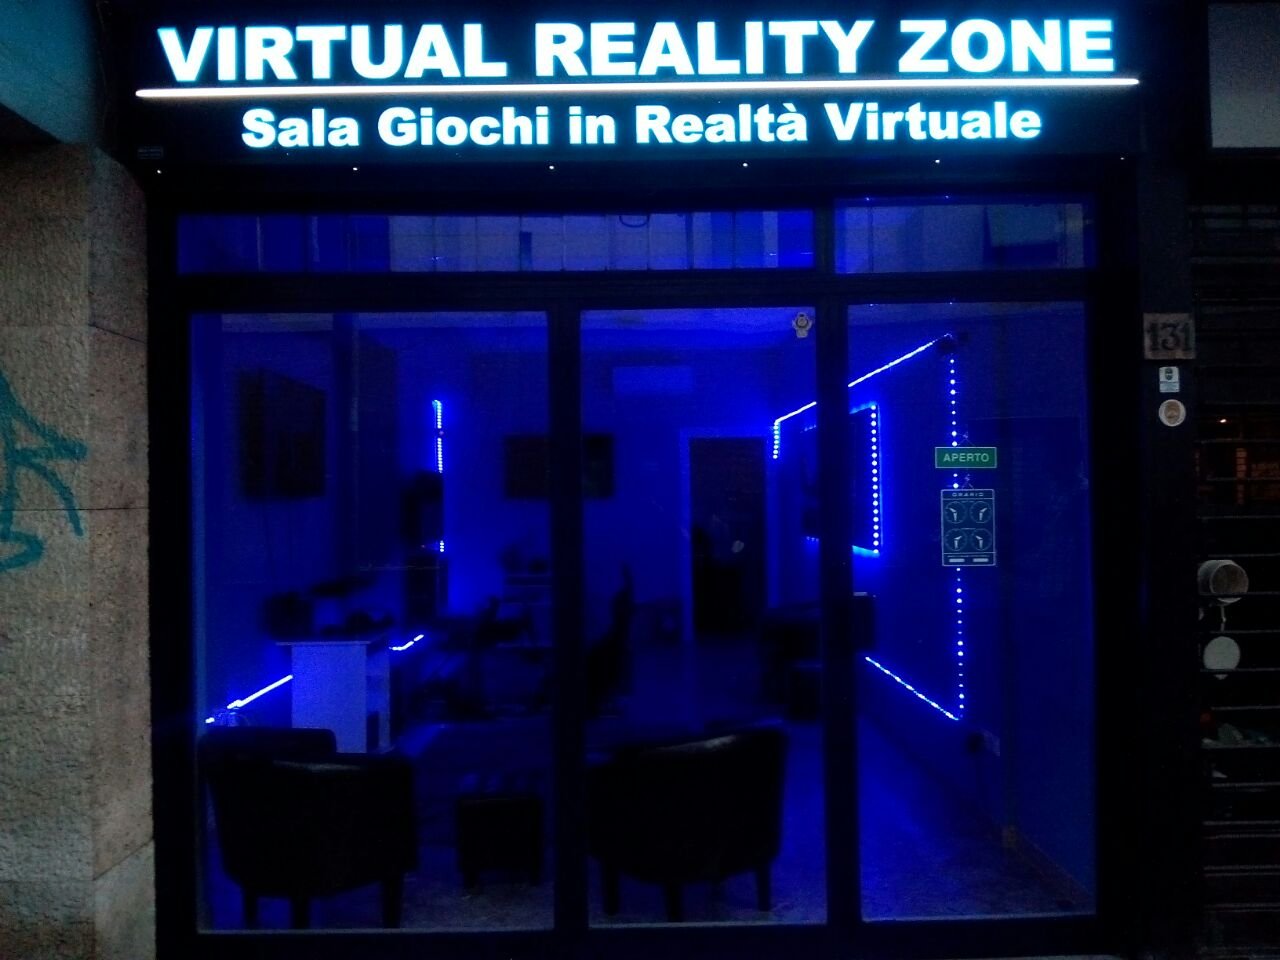 VR Zone - Virtual Reality Zone